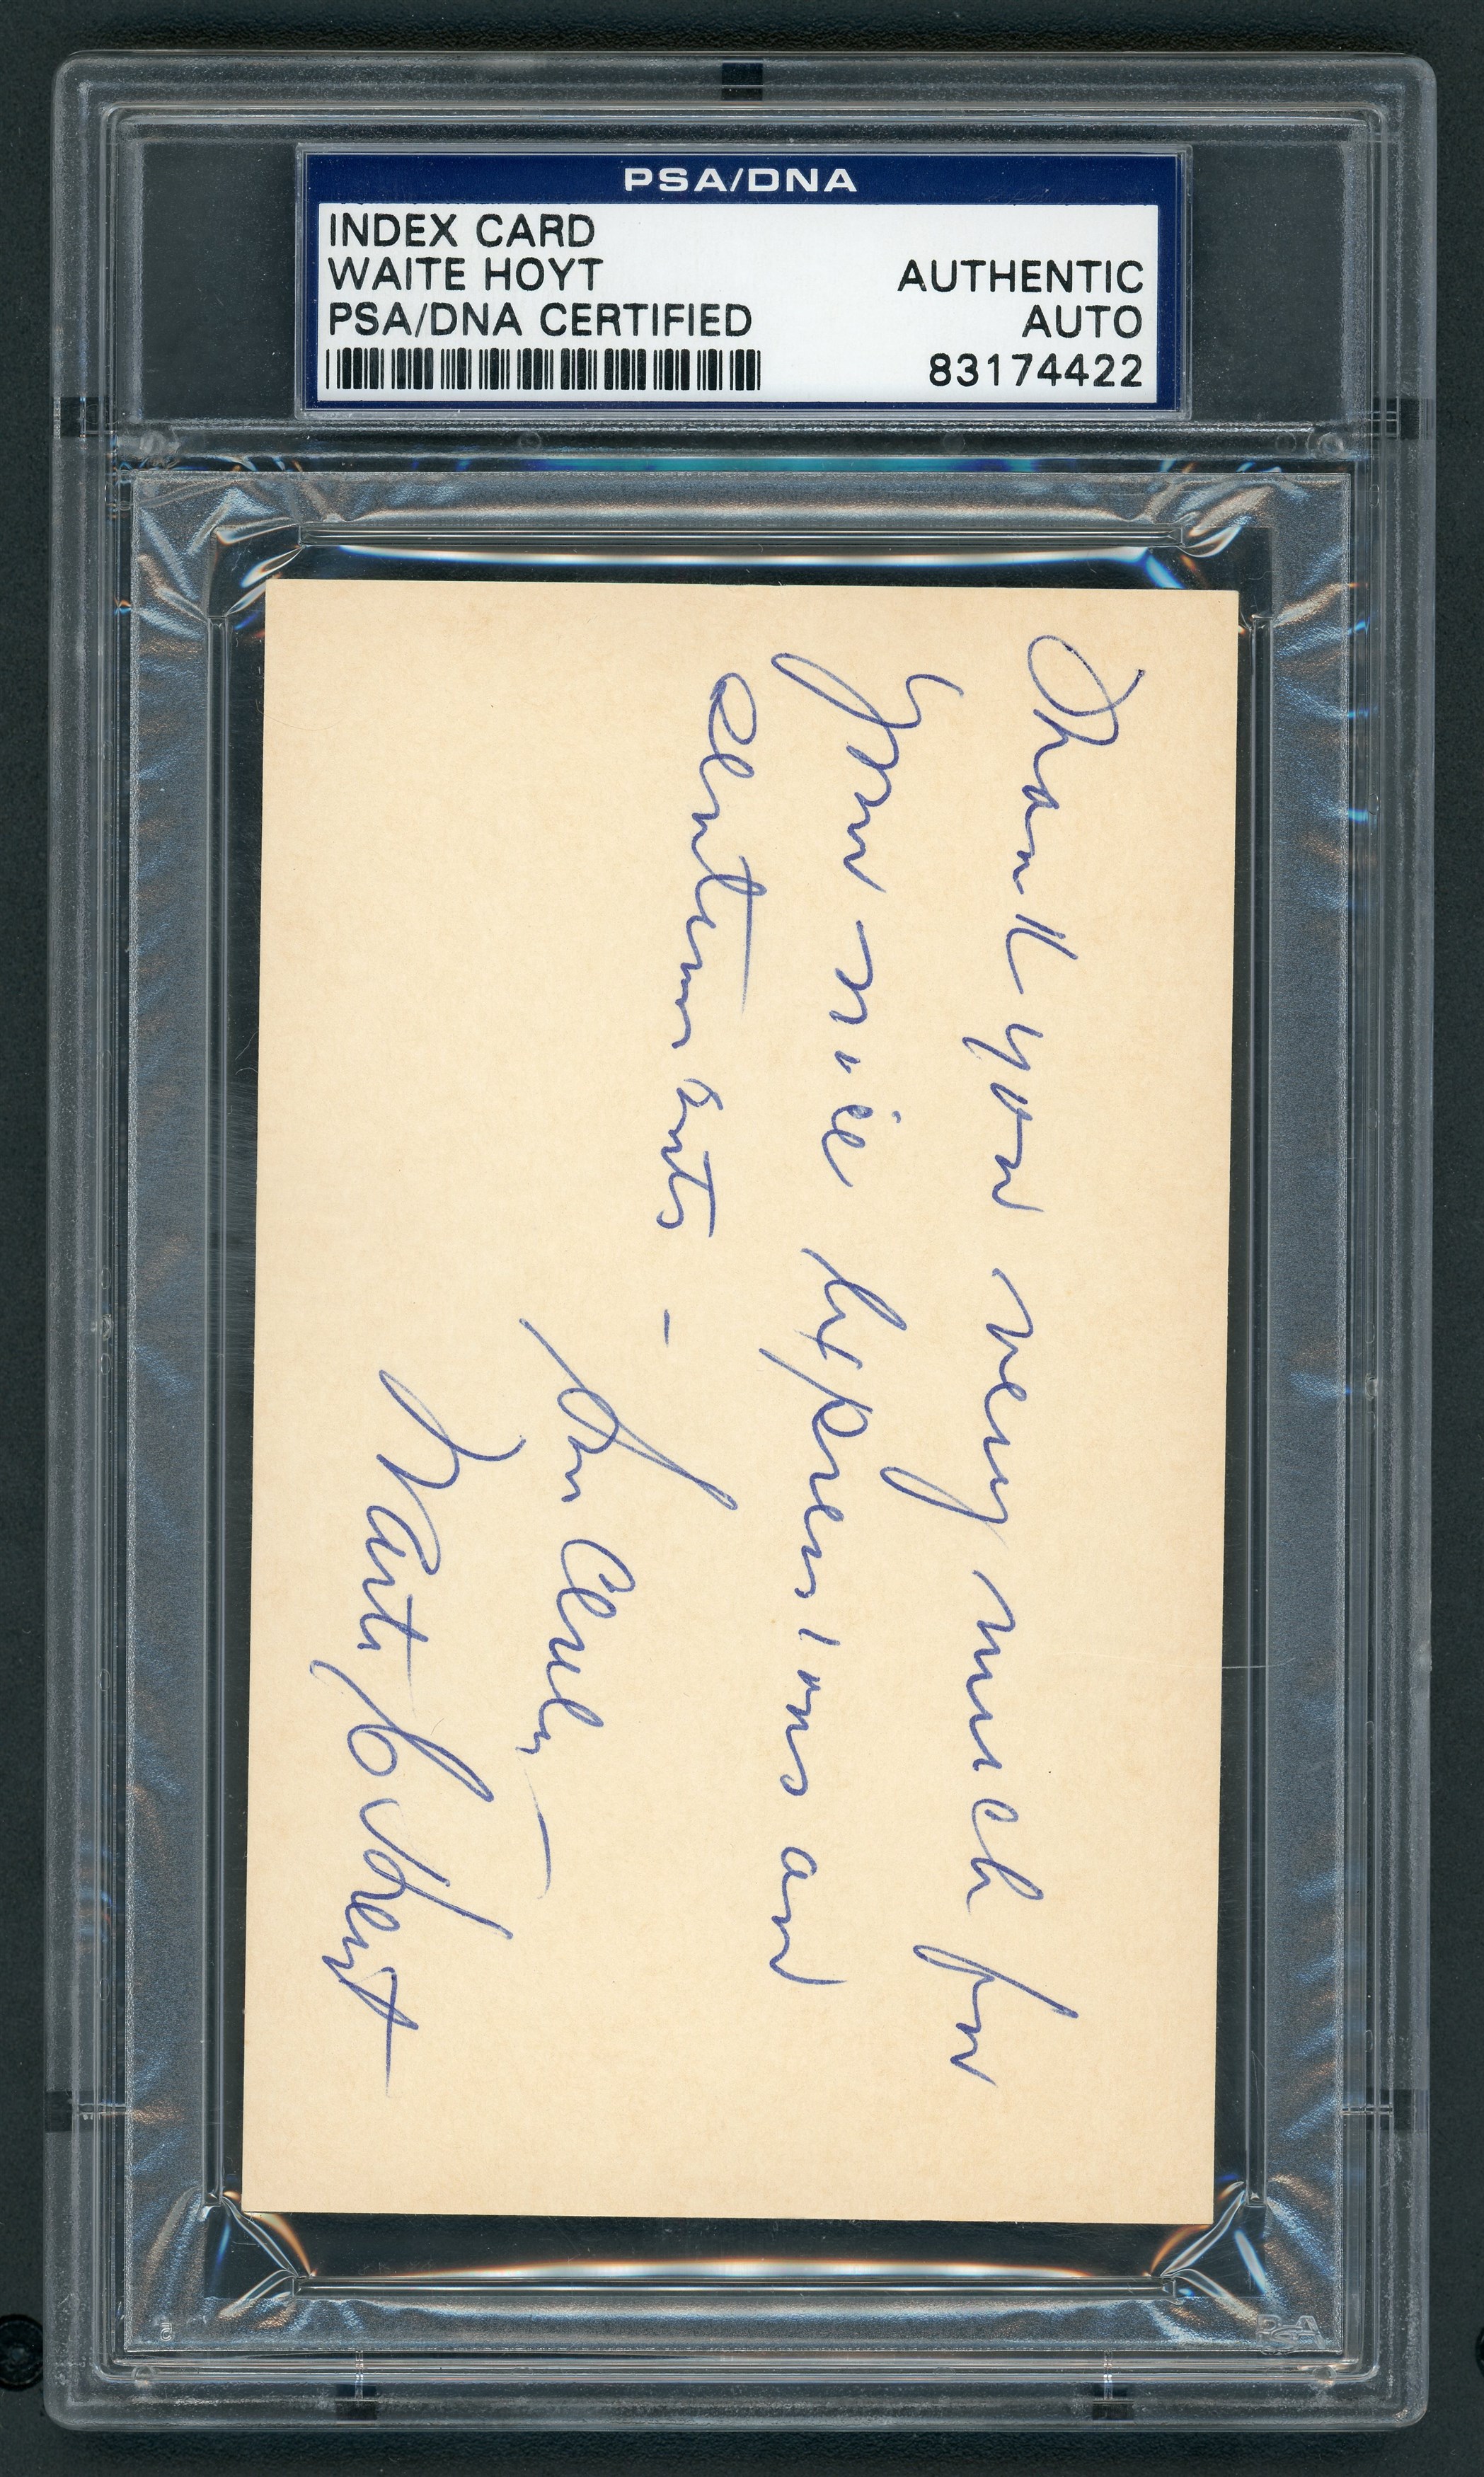 Baseball Autographs - Hall of Famers Signed Index Cards - Ashburn, Hoyt, Roush, Hooper (All PSA/DNA)